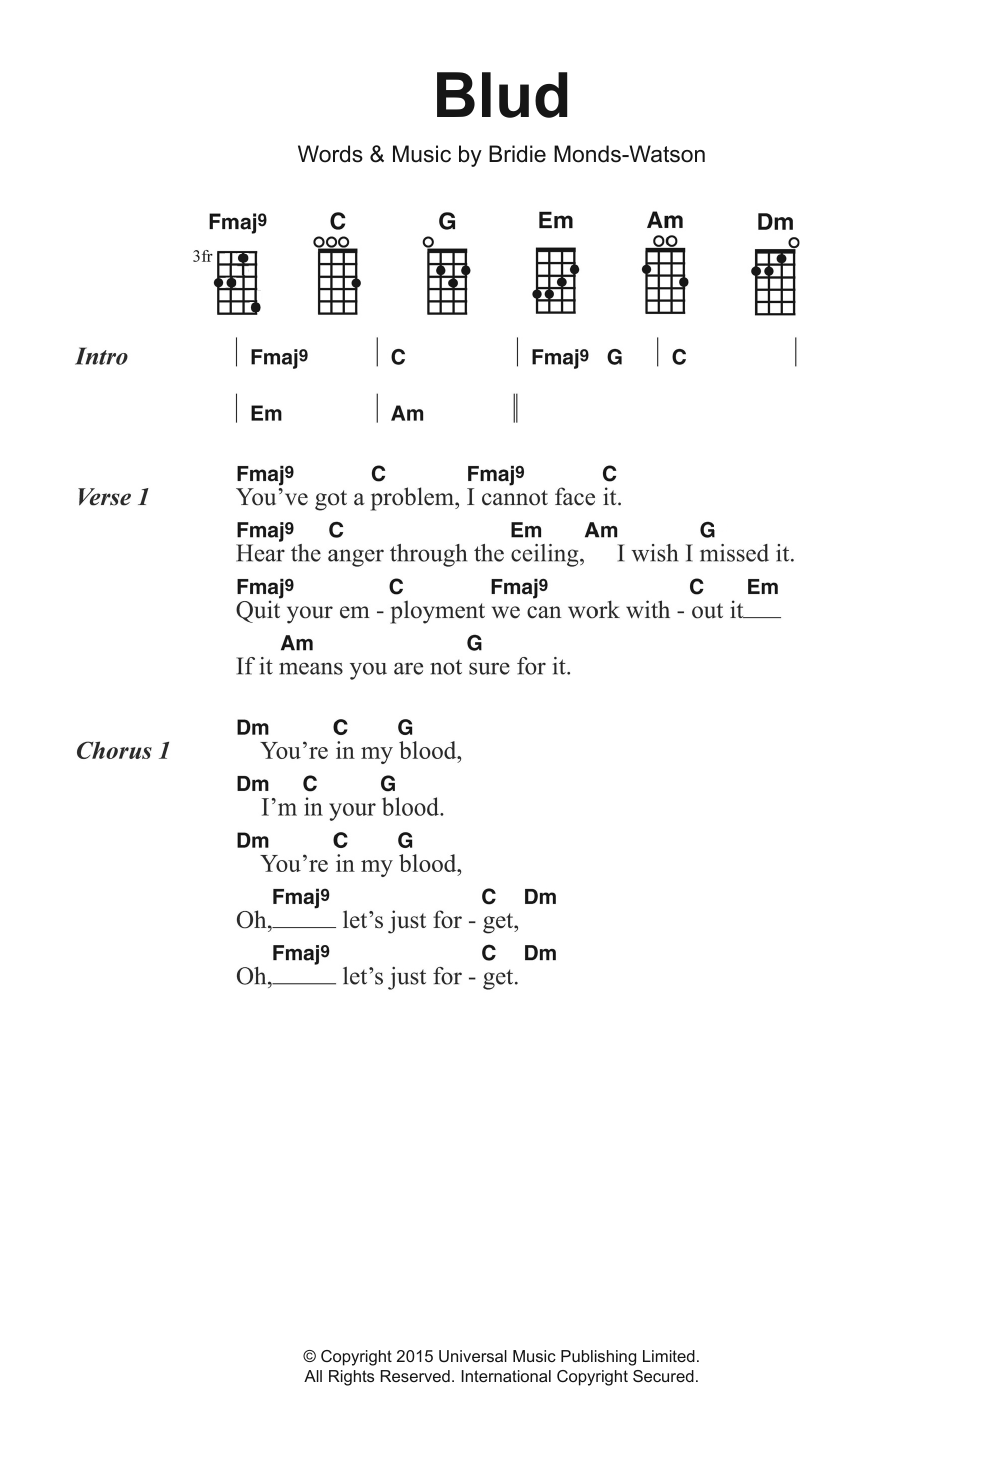 SOAK Blud sheet music notes and chords arranged for Guitar Chords/Lyrics